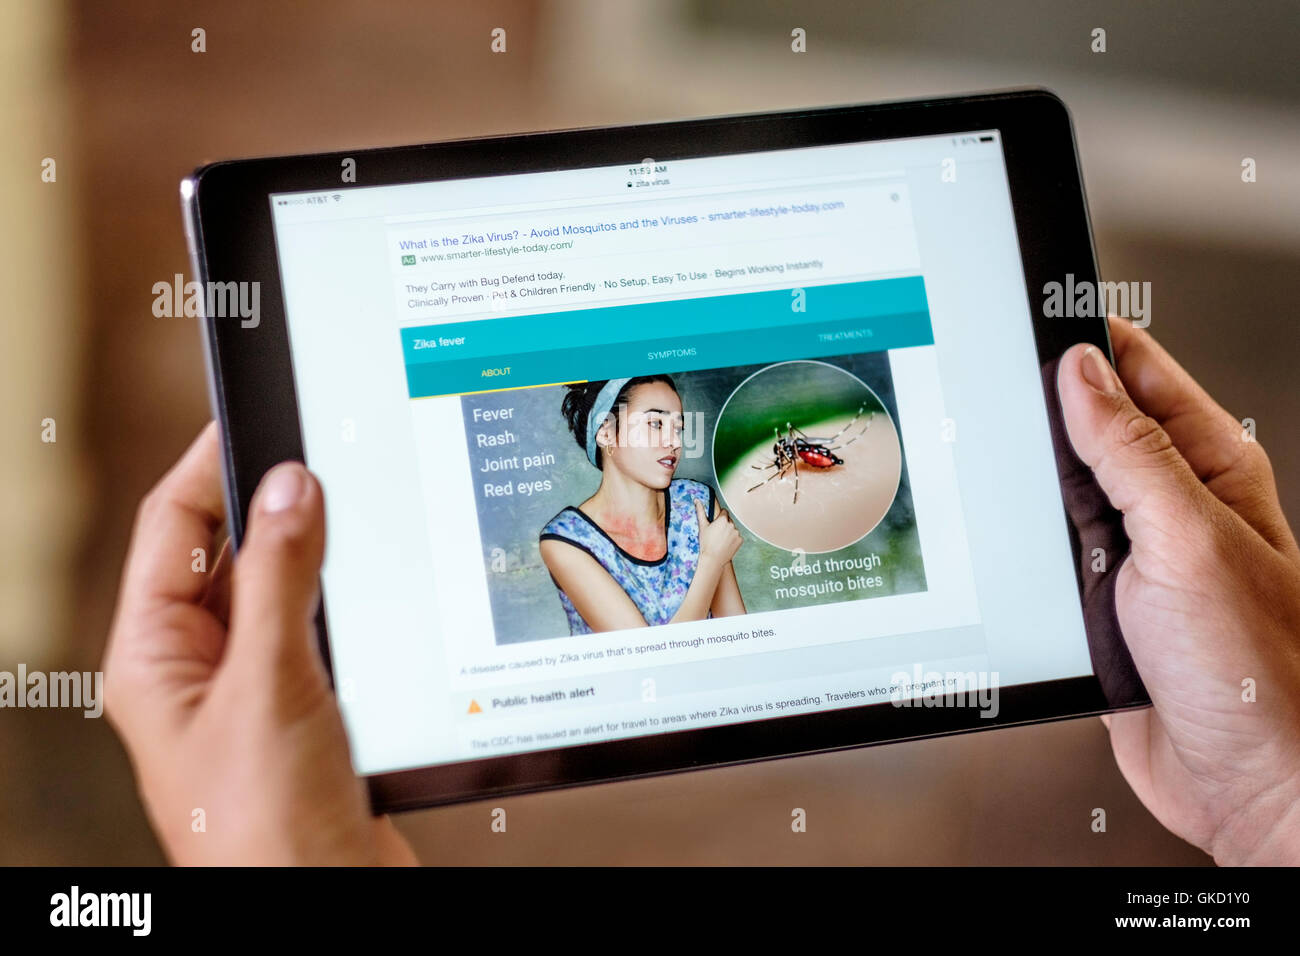 A young woman's hands hold an iPad researching the Zika virus. Closeup. Stock Photo